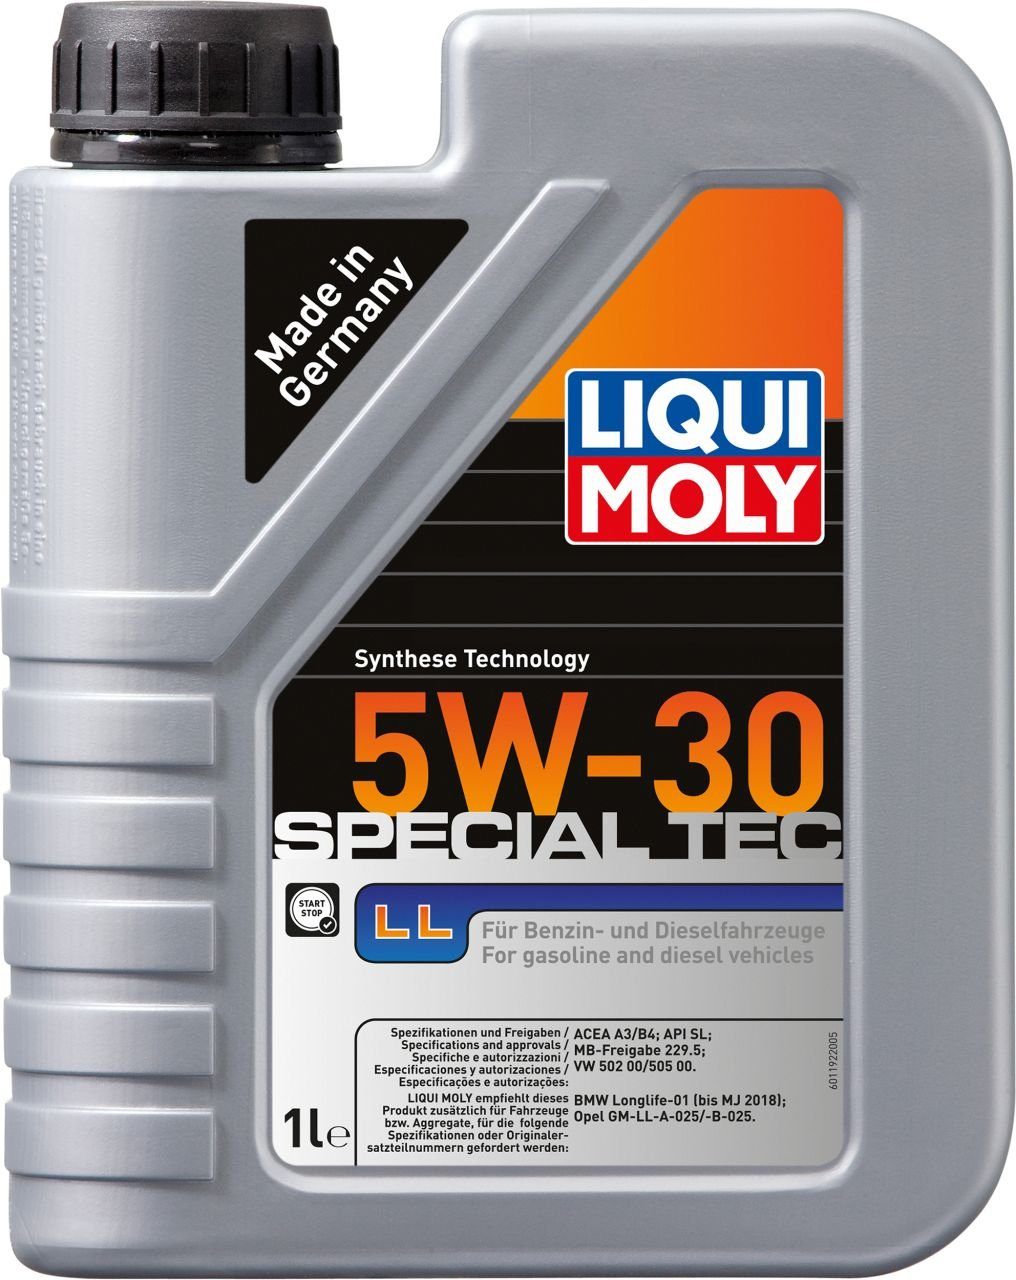 Liqui Moly Special Tec DX1 5W-30 Motoröl 5l - Motoröle für alle